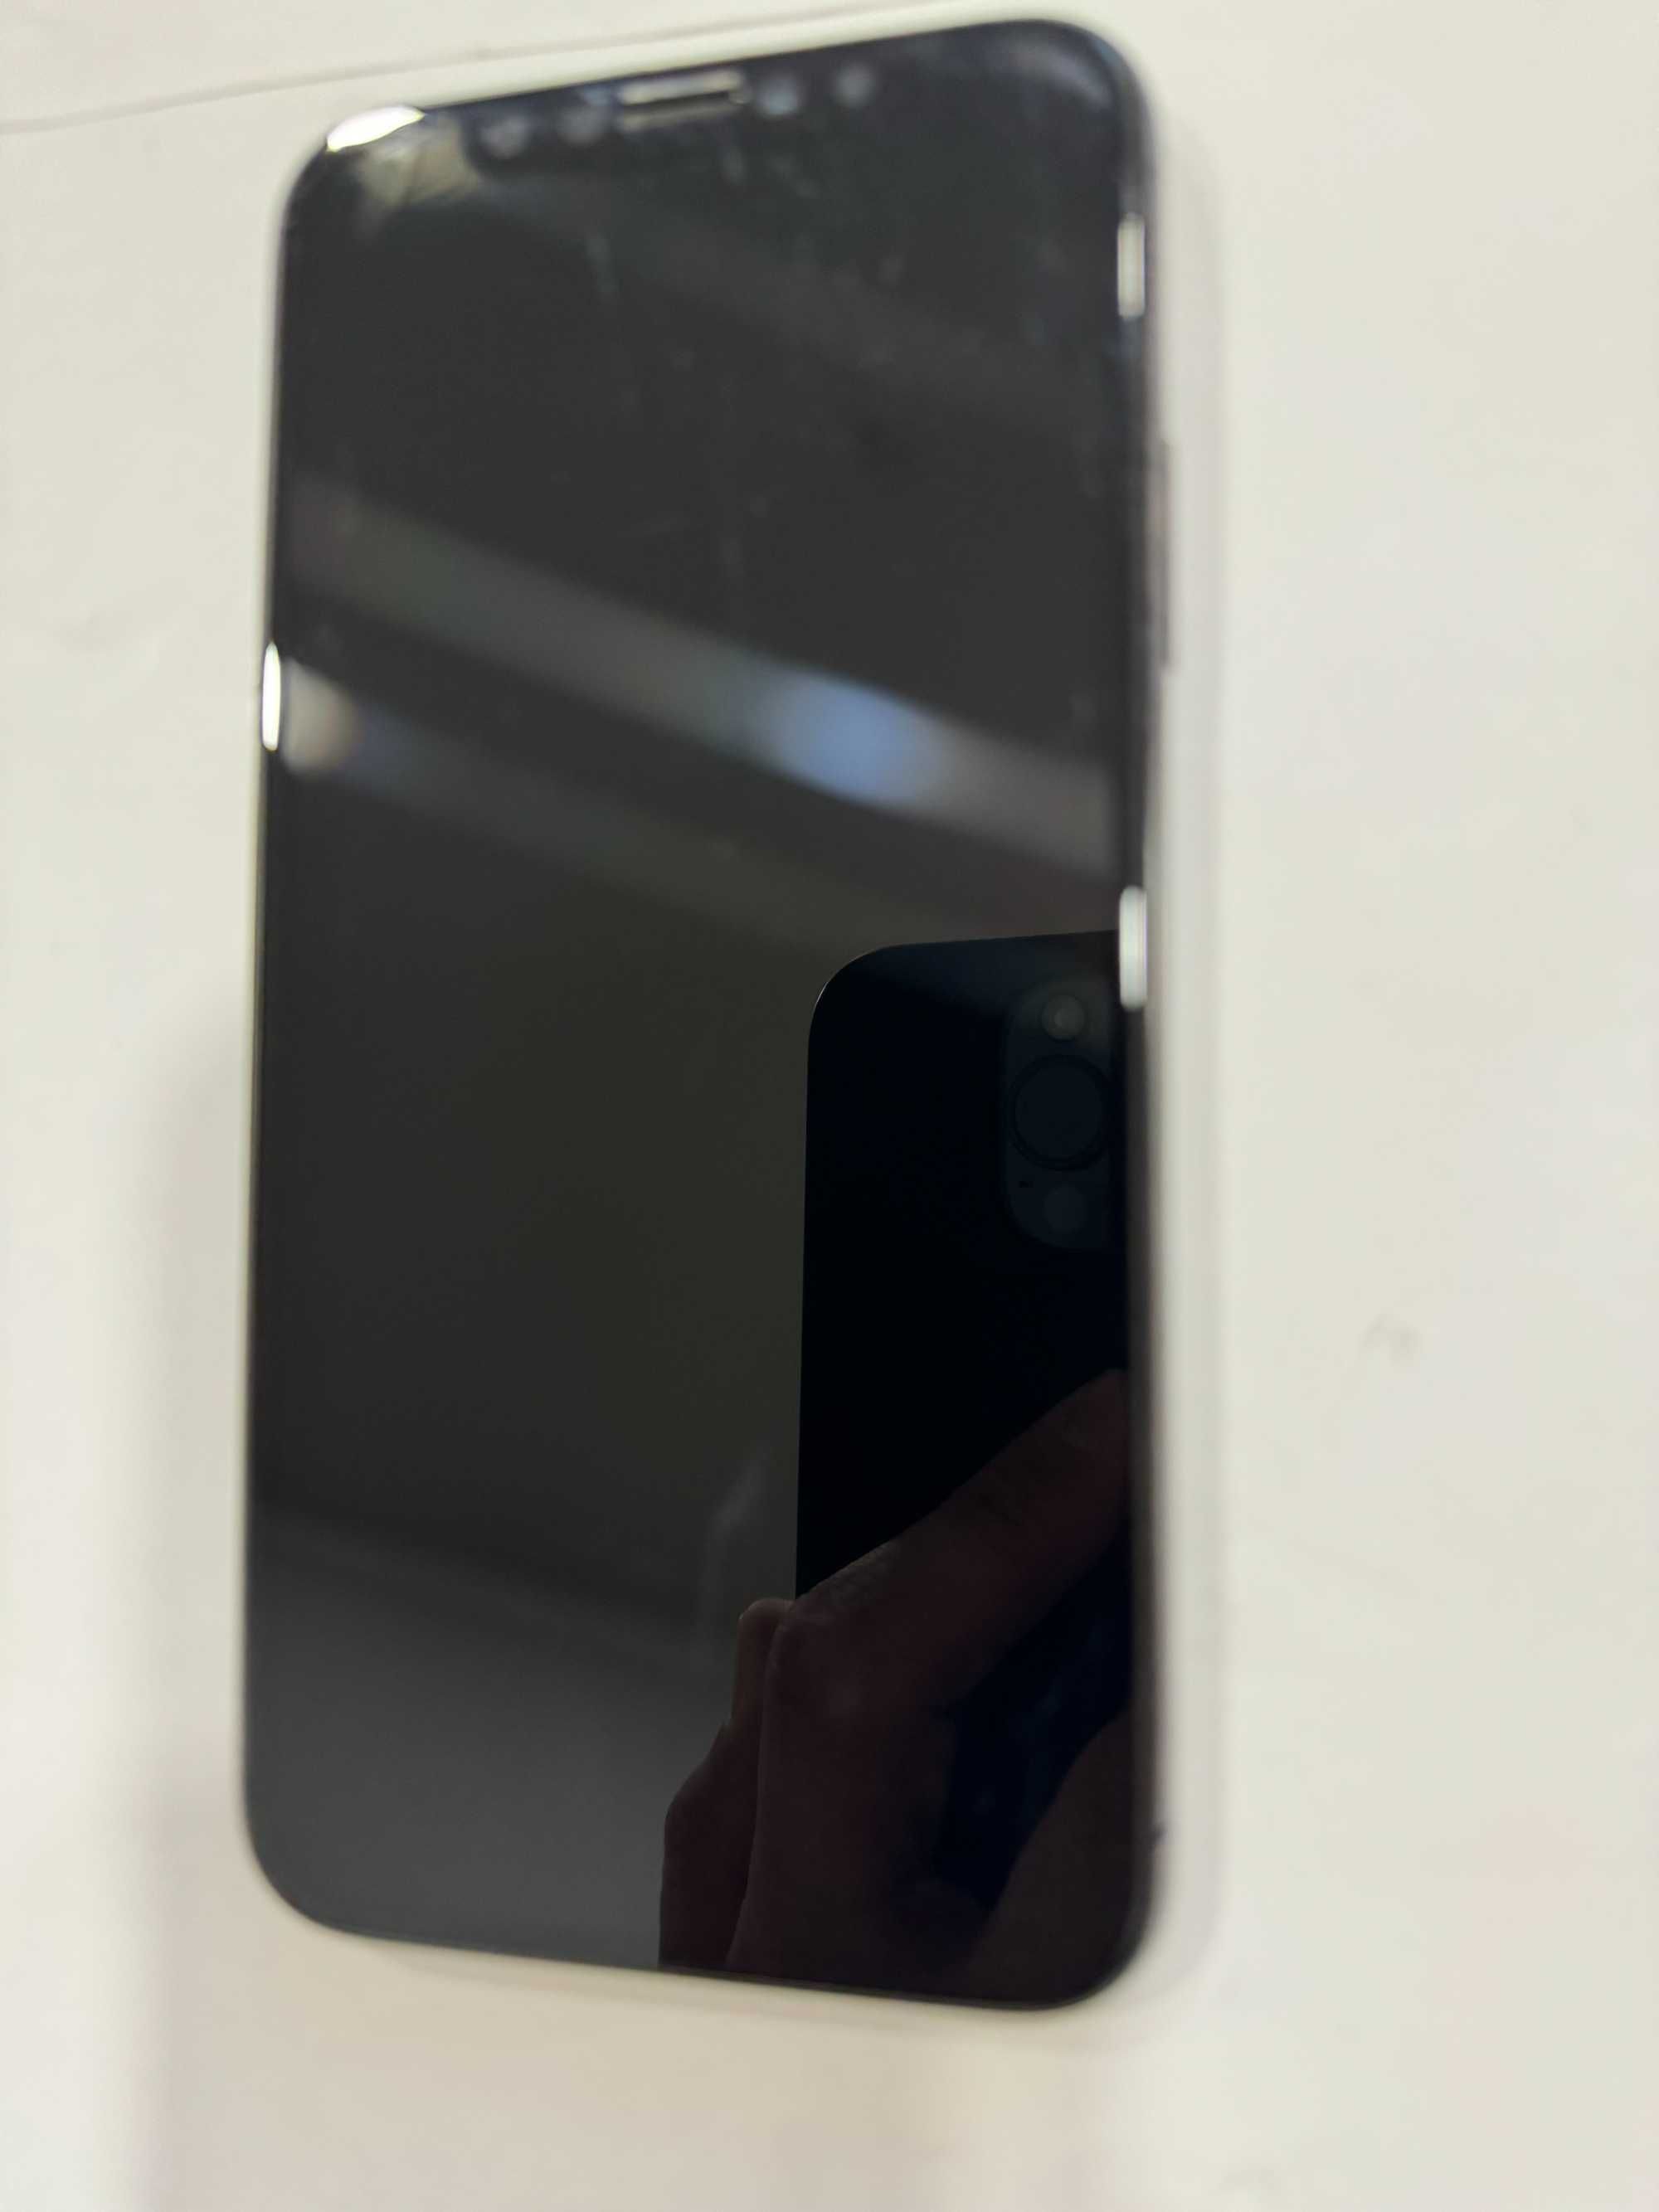 Apple iphone X 256GB black - perfect funcțional - spate cu fisuri